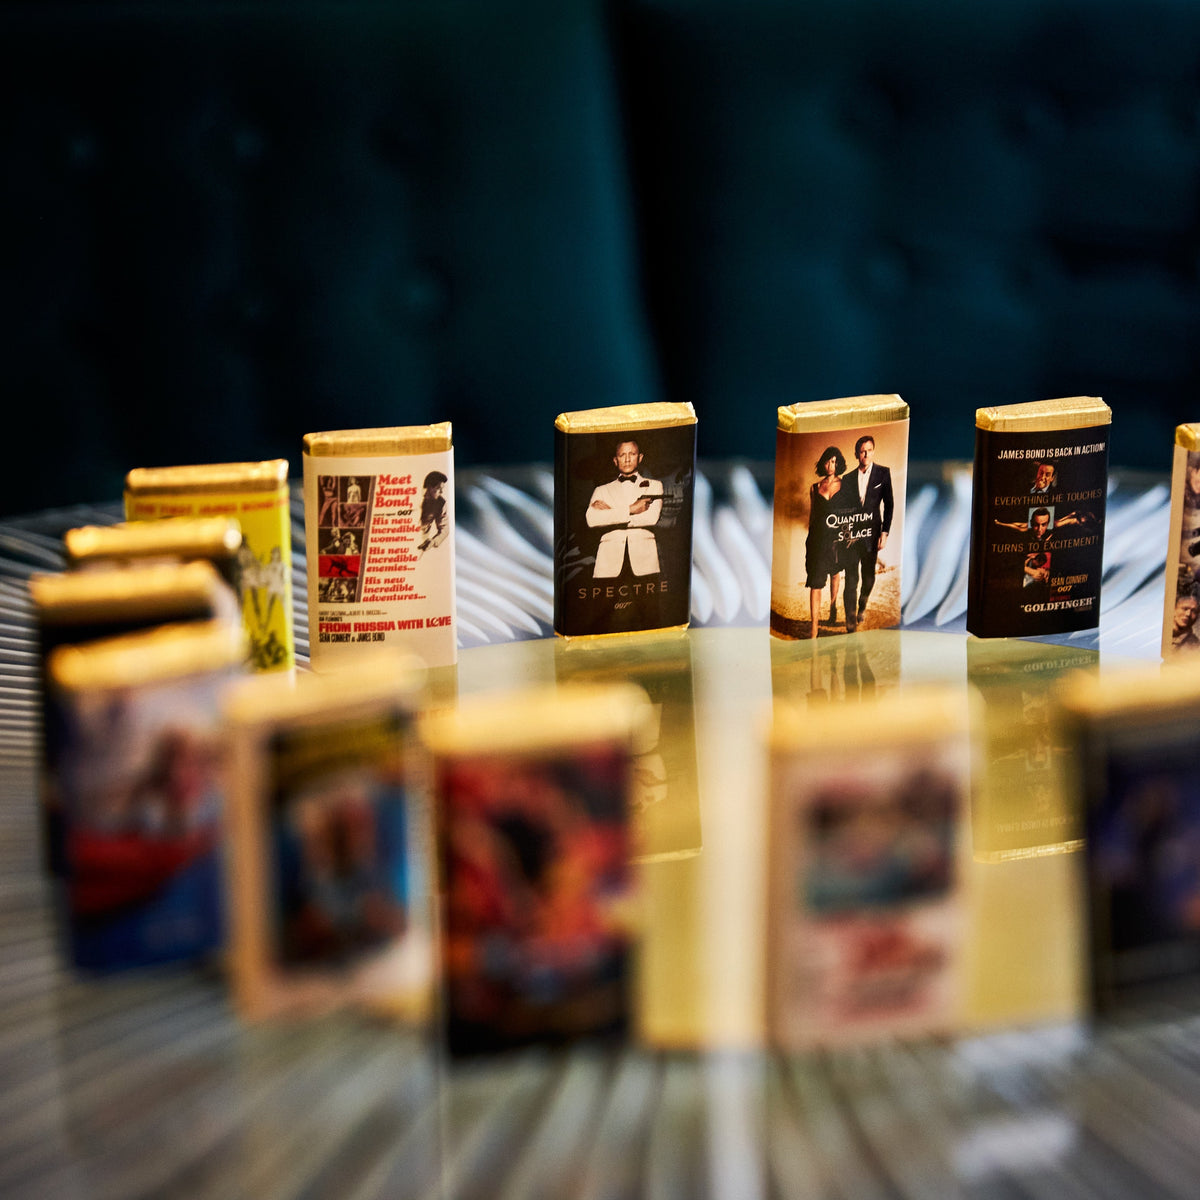 James Bond Mini Milk Chocolate Bars Tin - By Charbonnel et Walker (270g)